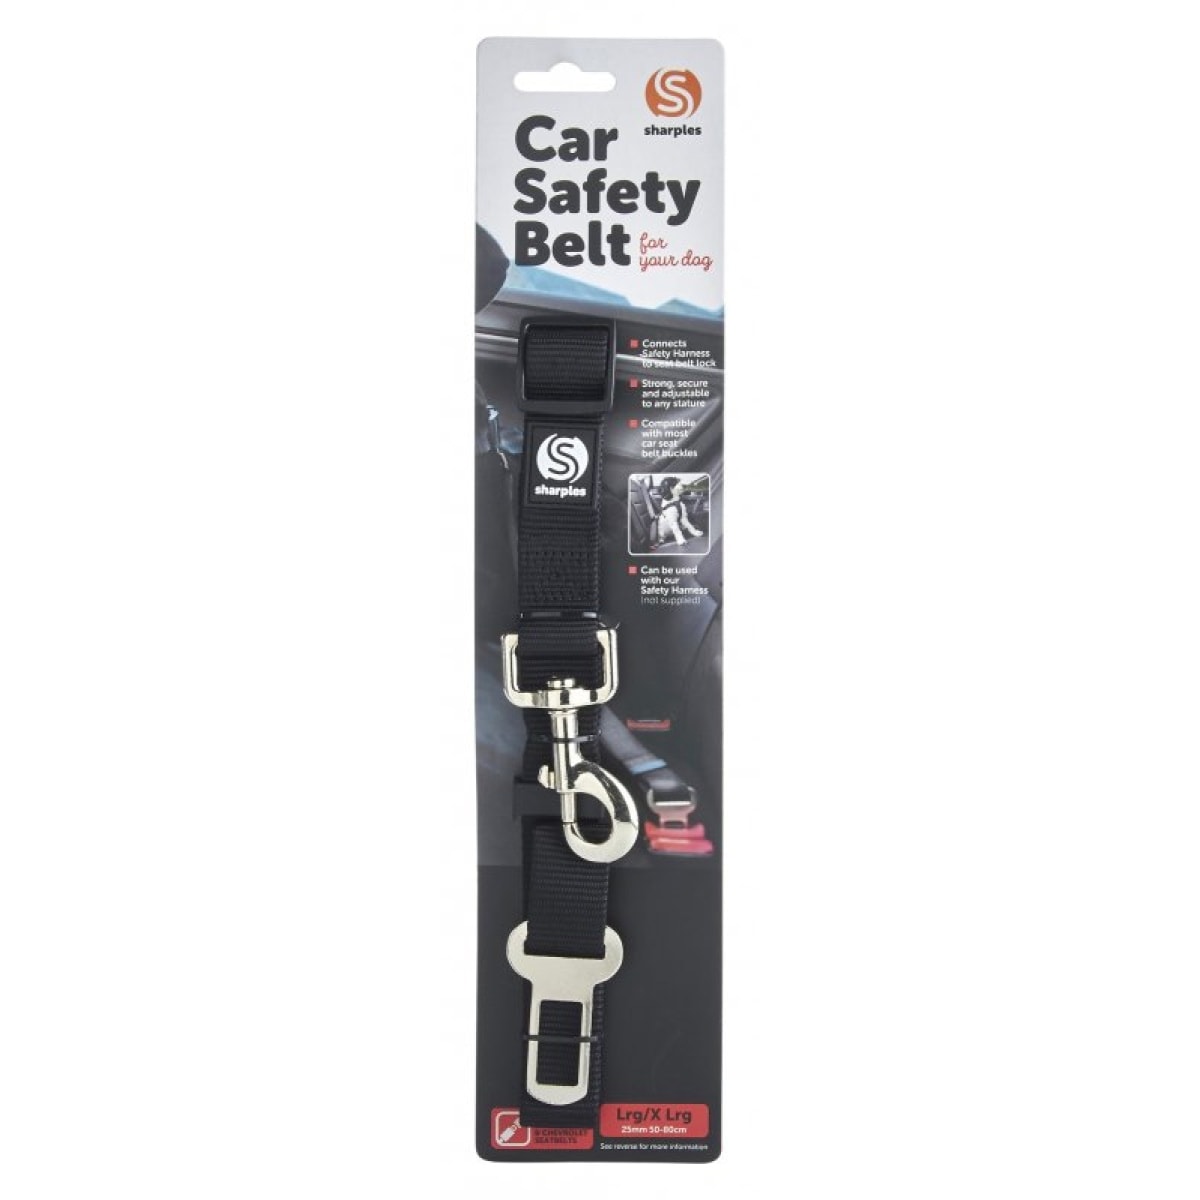 Car Safety Belt - L / XL Main Image